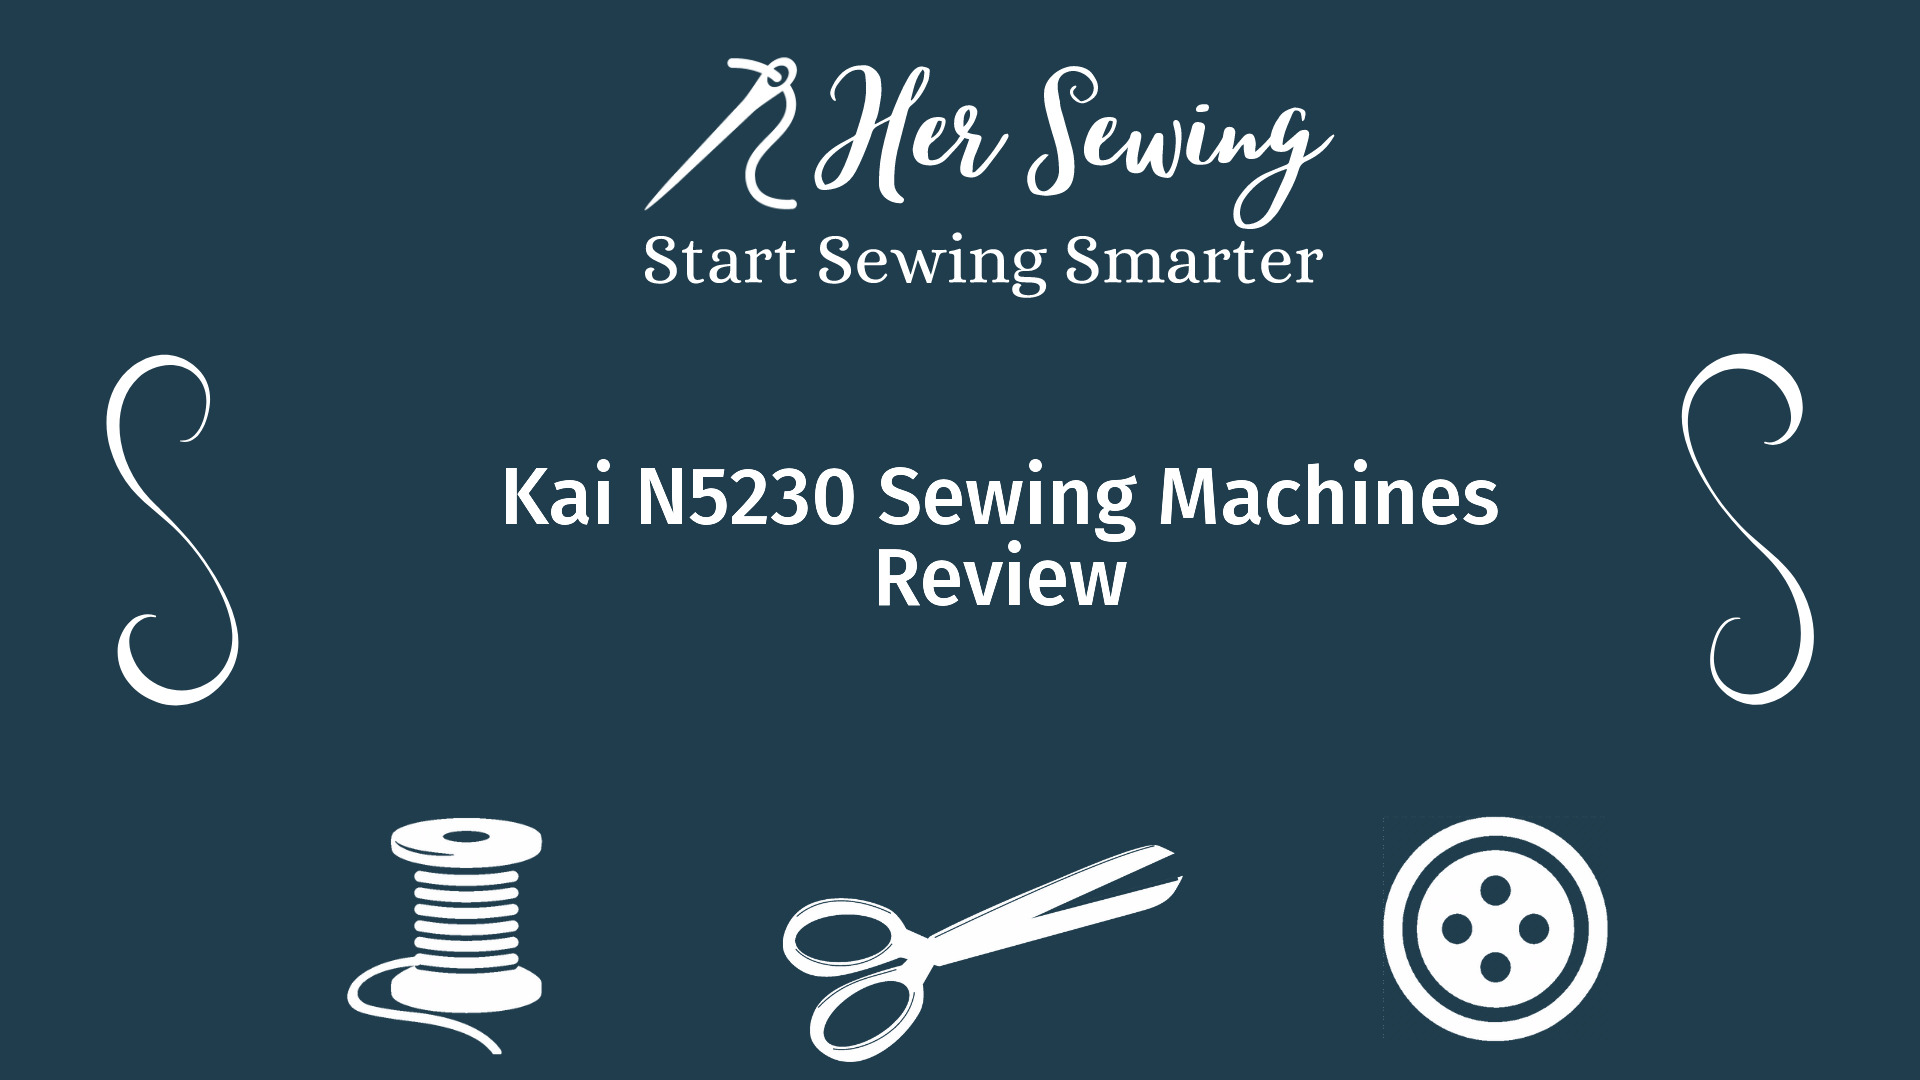 Kai N5230 Sewing Machines Review